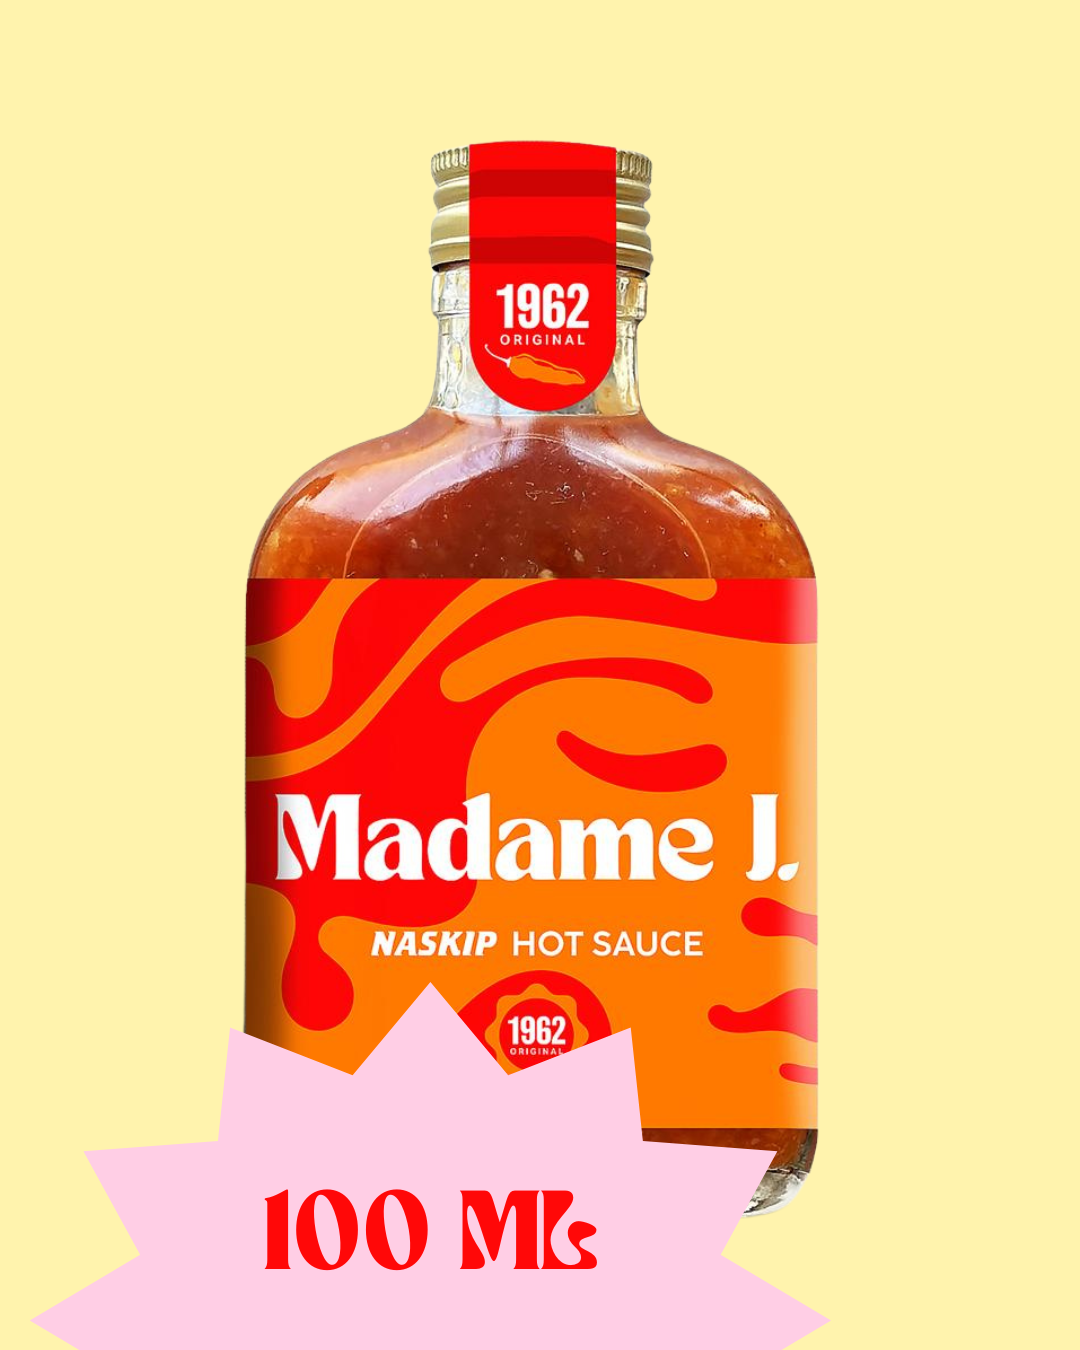 100ML Madame J. - Original 1962 Naskip Hot Sauce